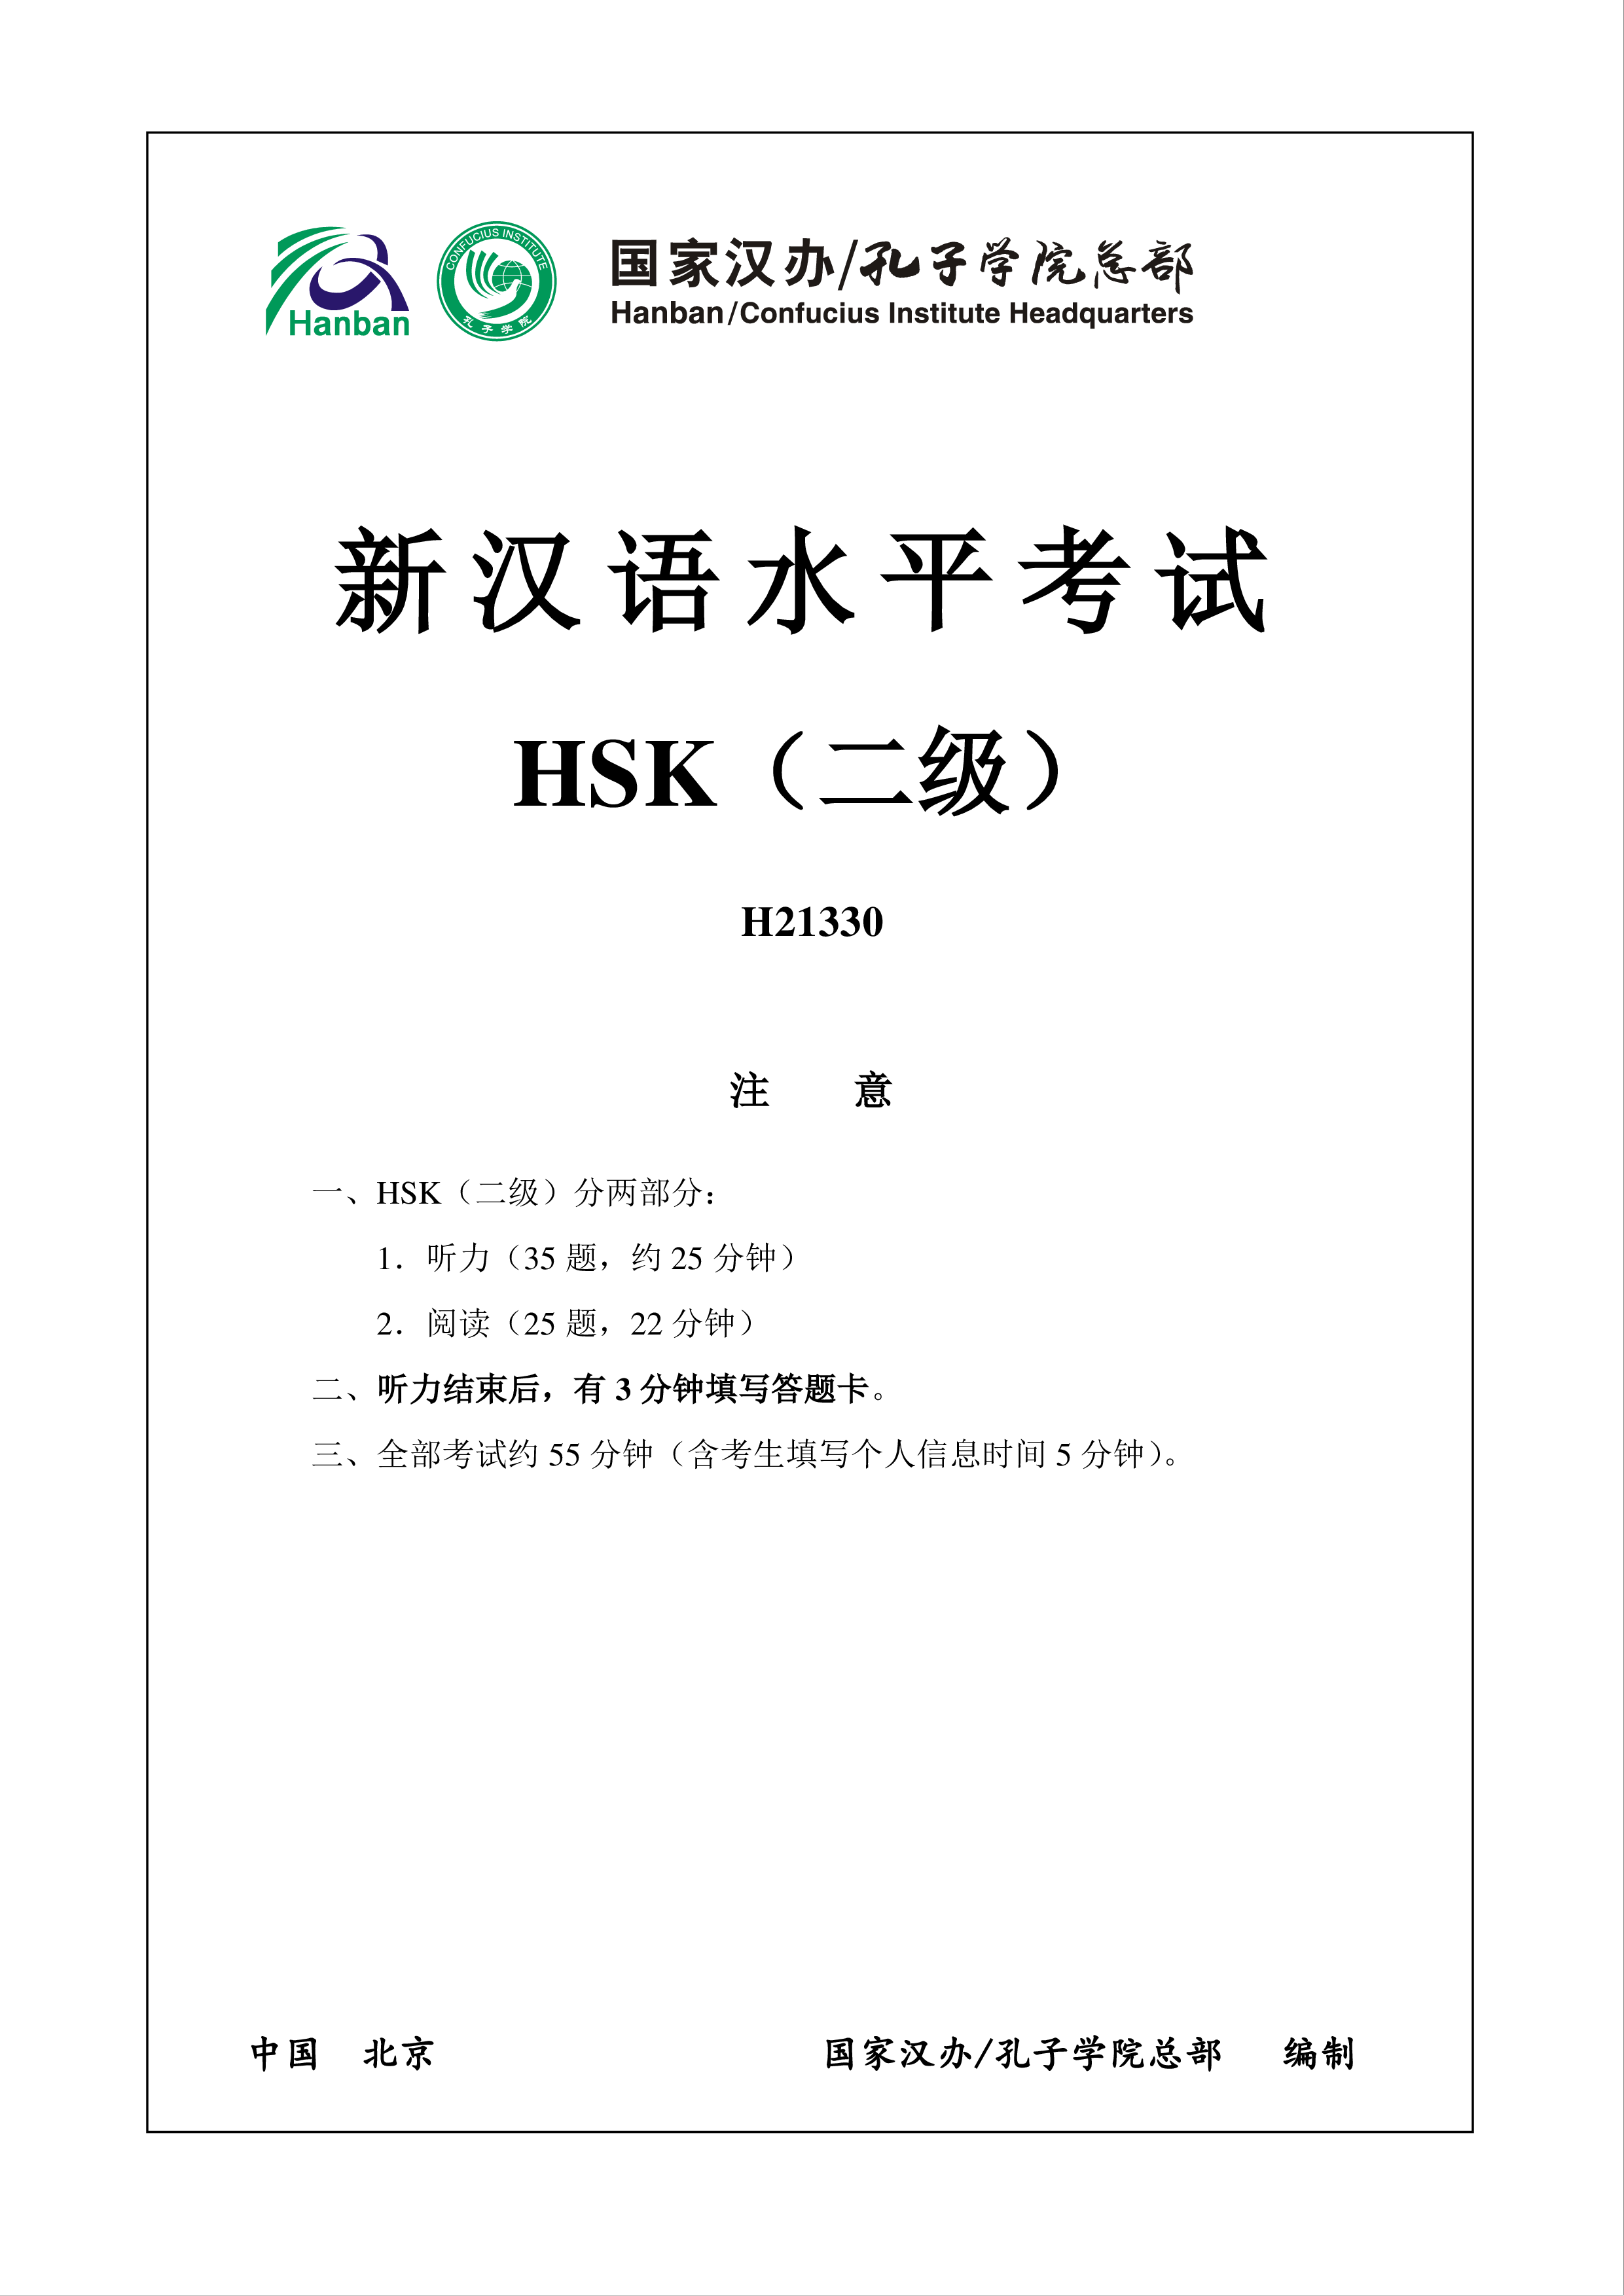 hsk2 h21330 chinese exam including answers, audio plantilla imagen principal